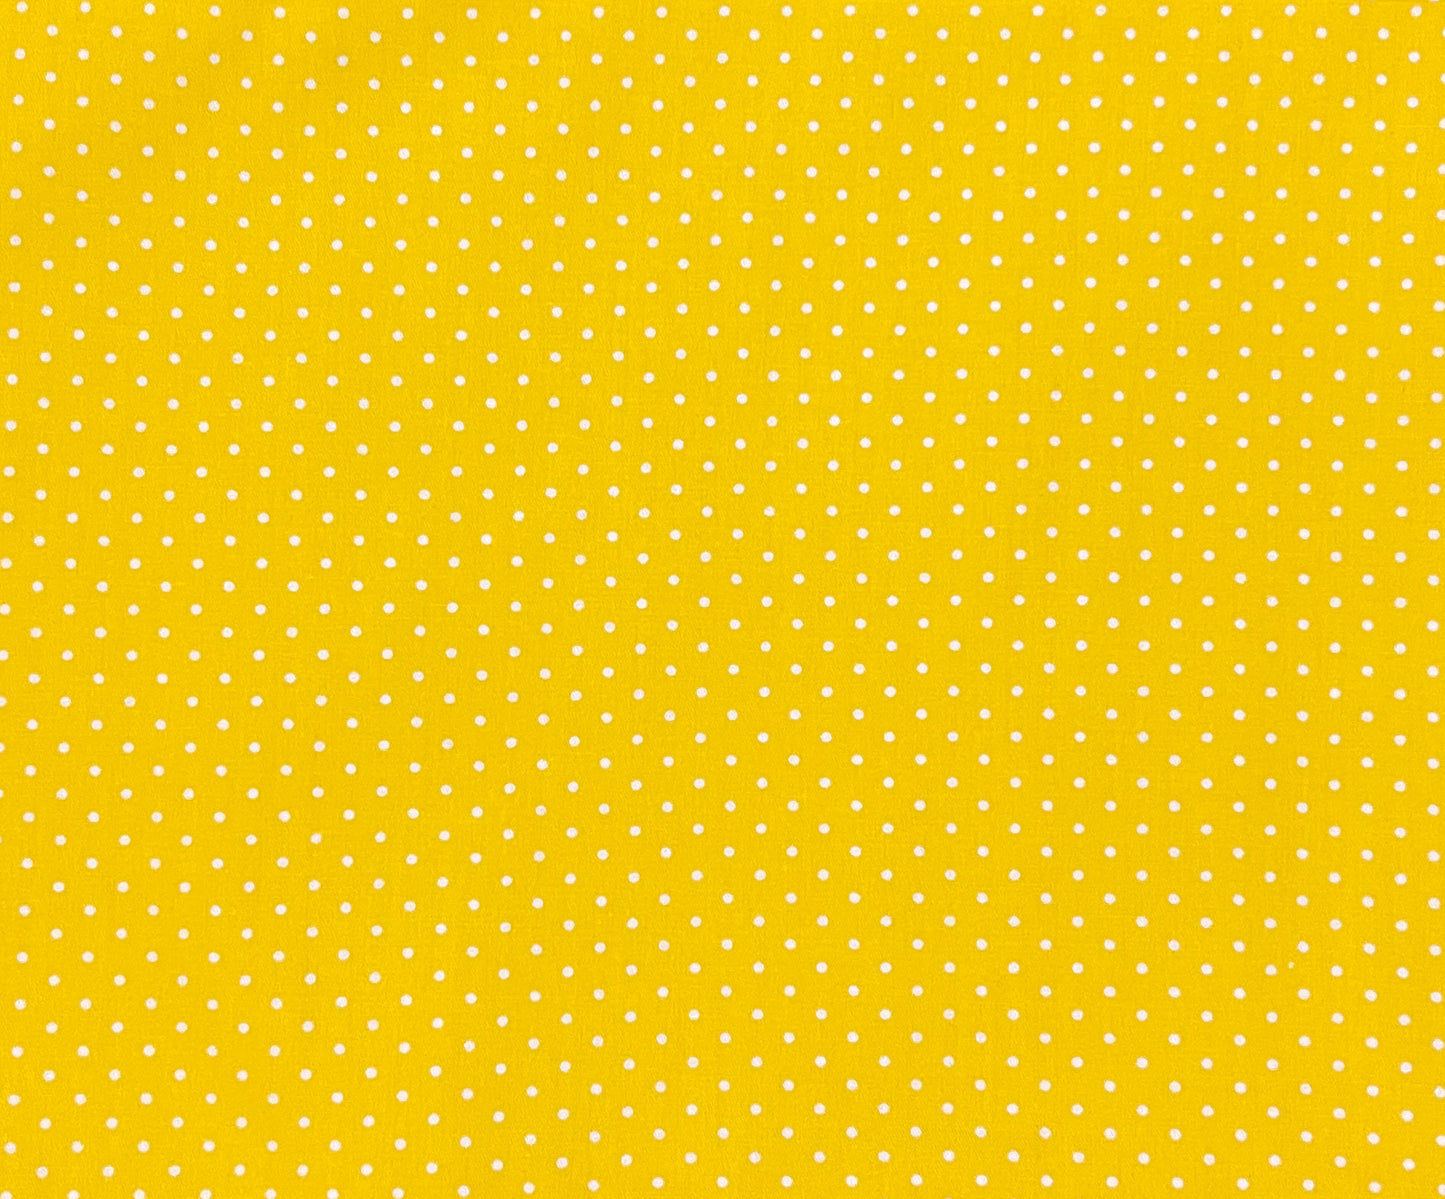 White dots on yellow